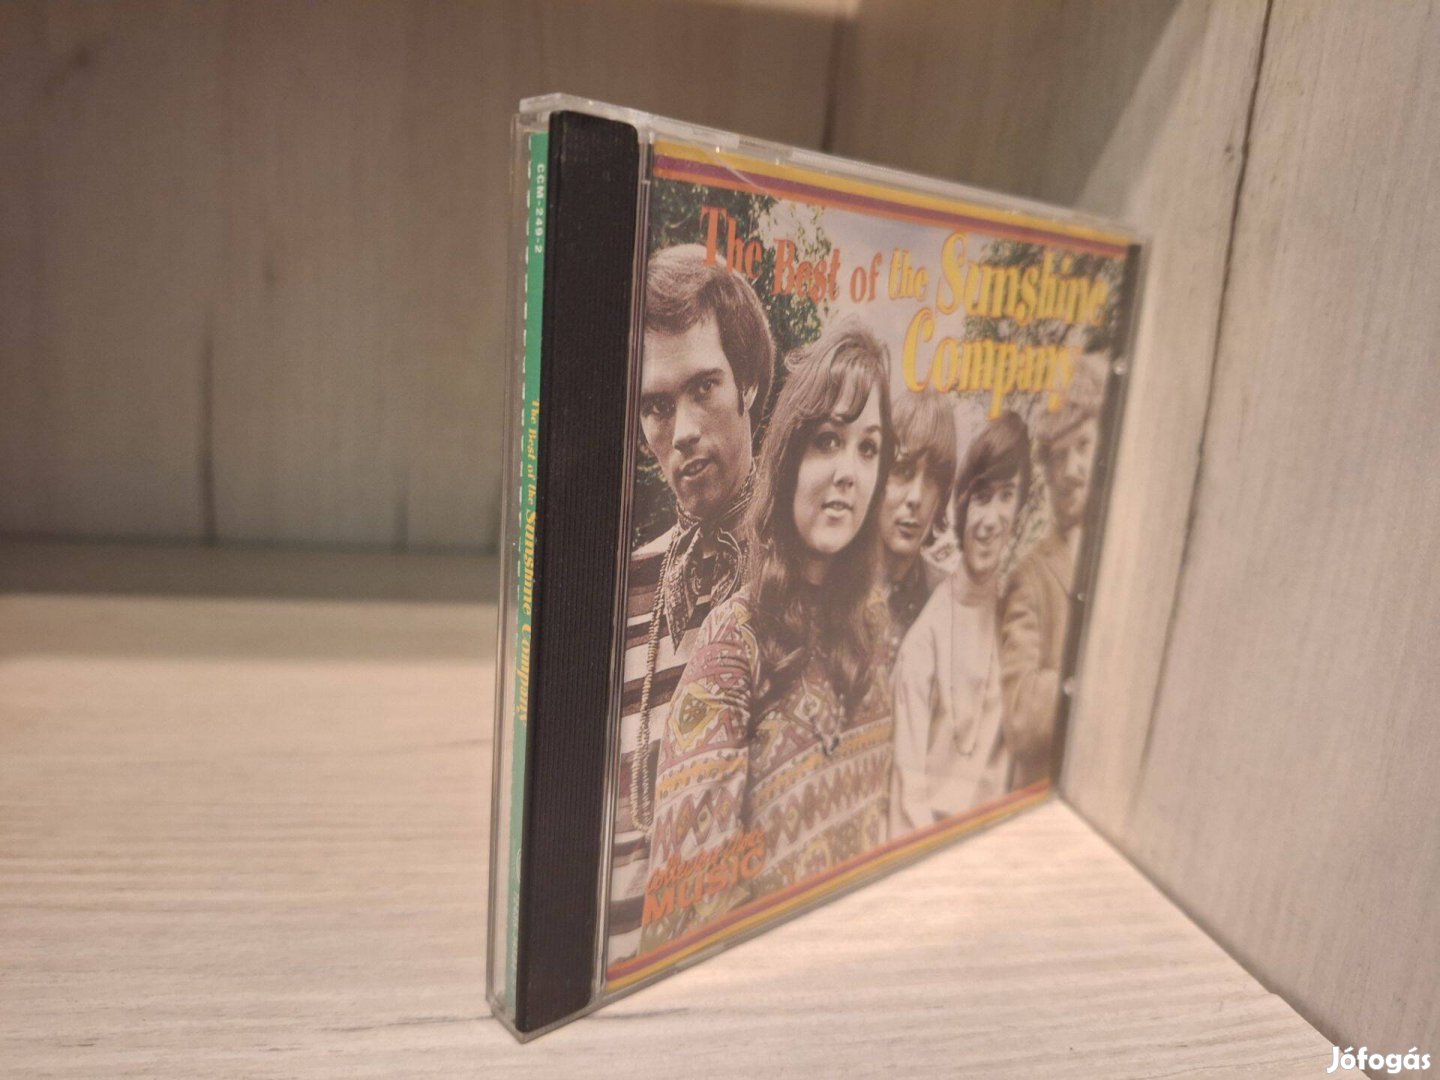 The Sunshine Company - The Best Of The Sunshine Company CD